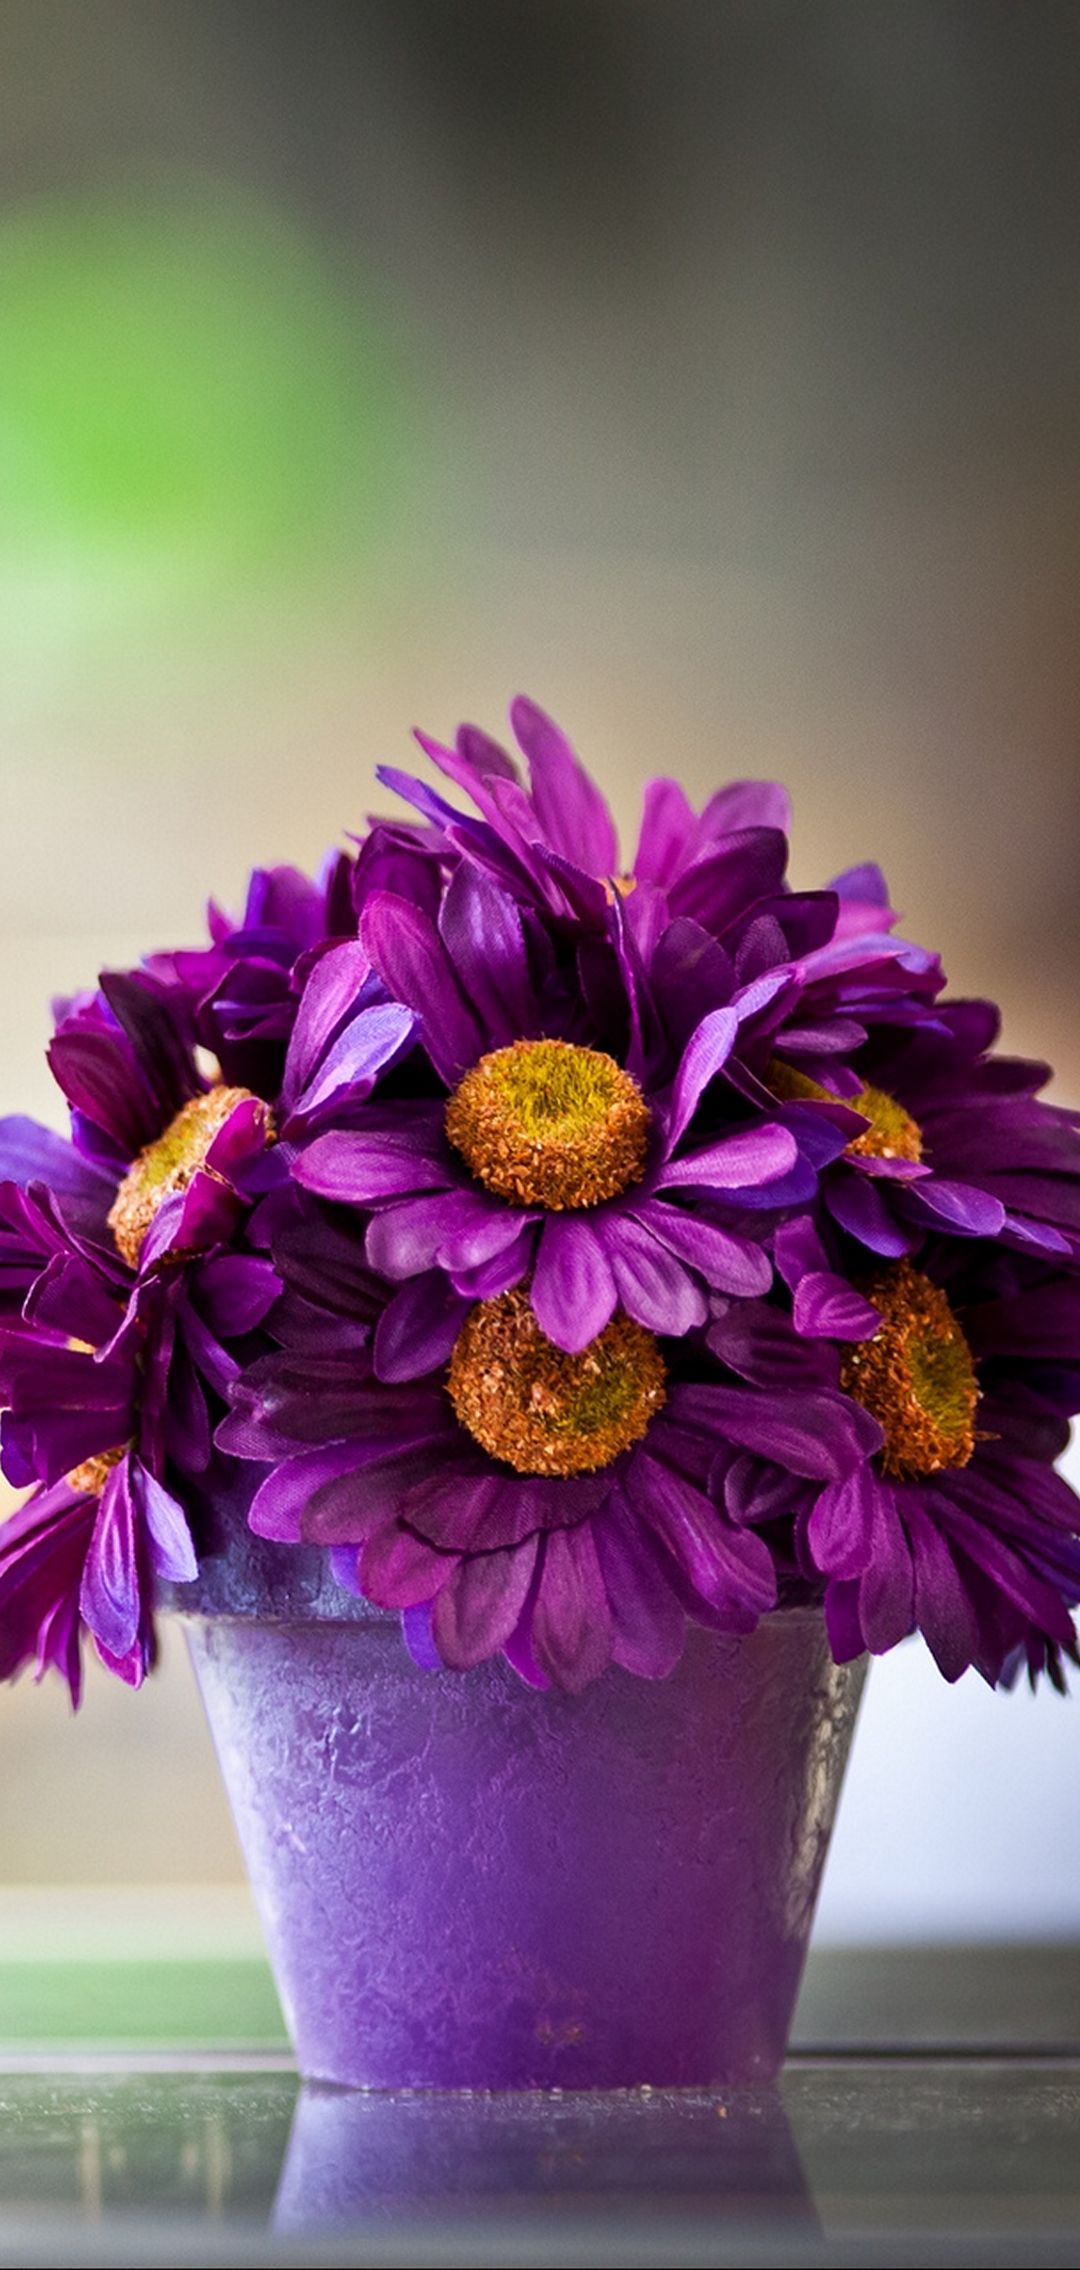  Flower  Pot  Purple  Petals 1080x2270 